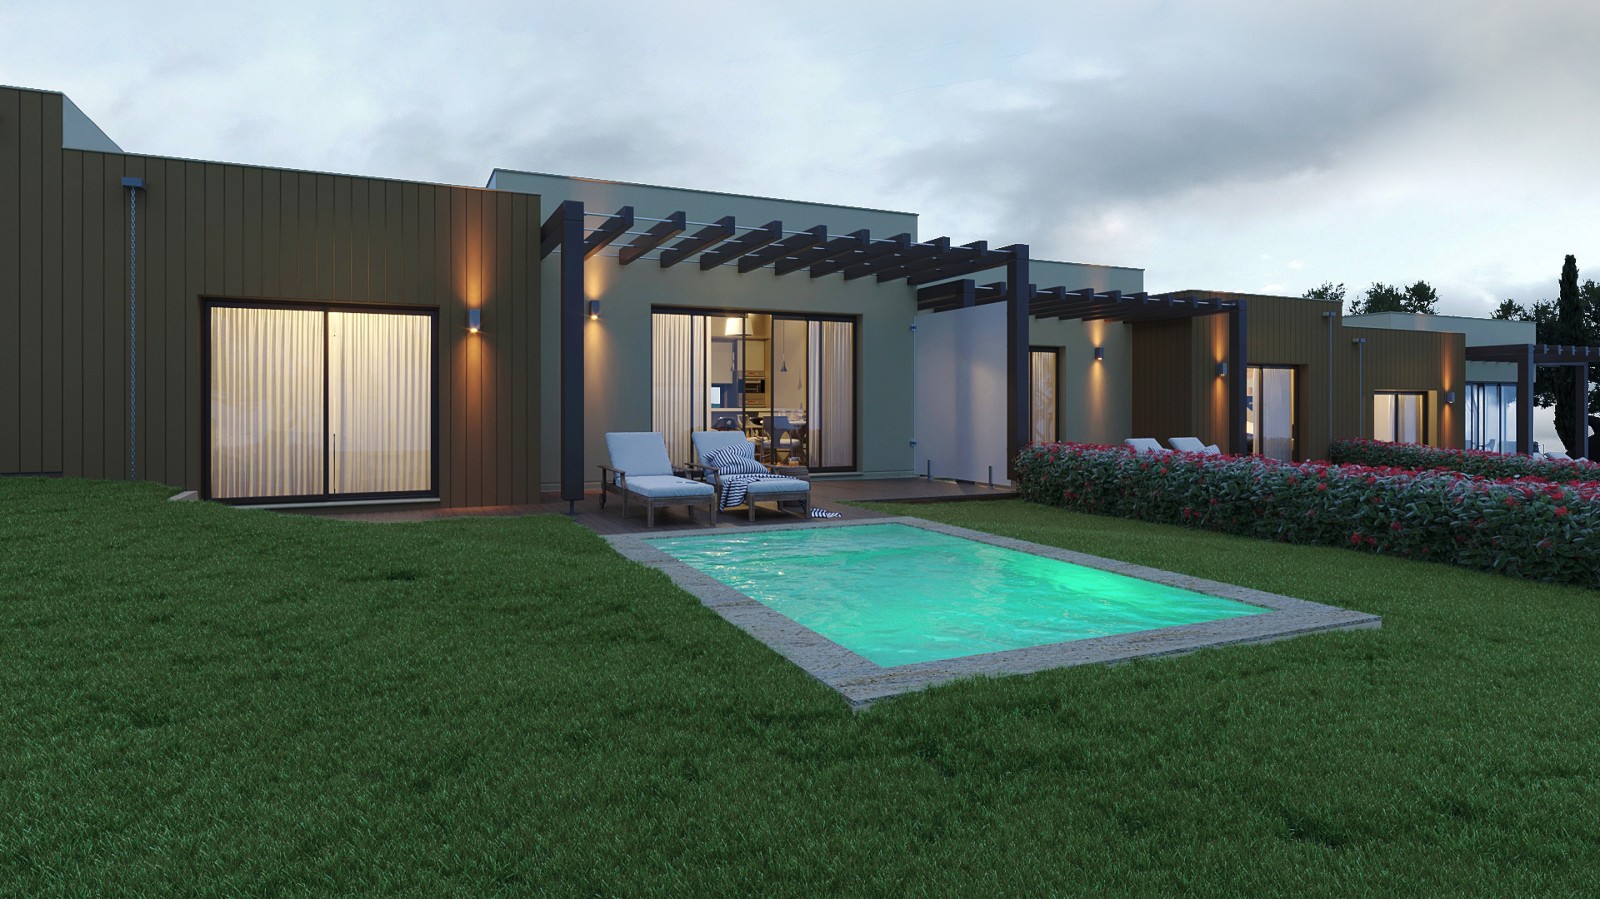 2 bedroom semi-detached villa with swimming pool for sale in Golf resort, Algarve_218692